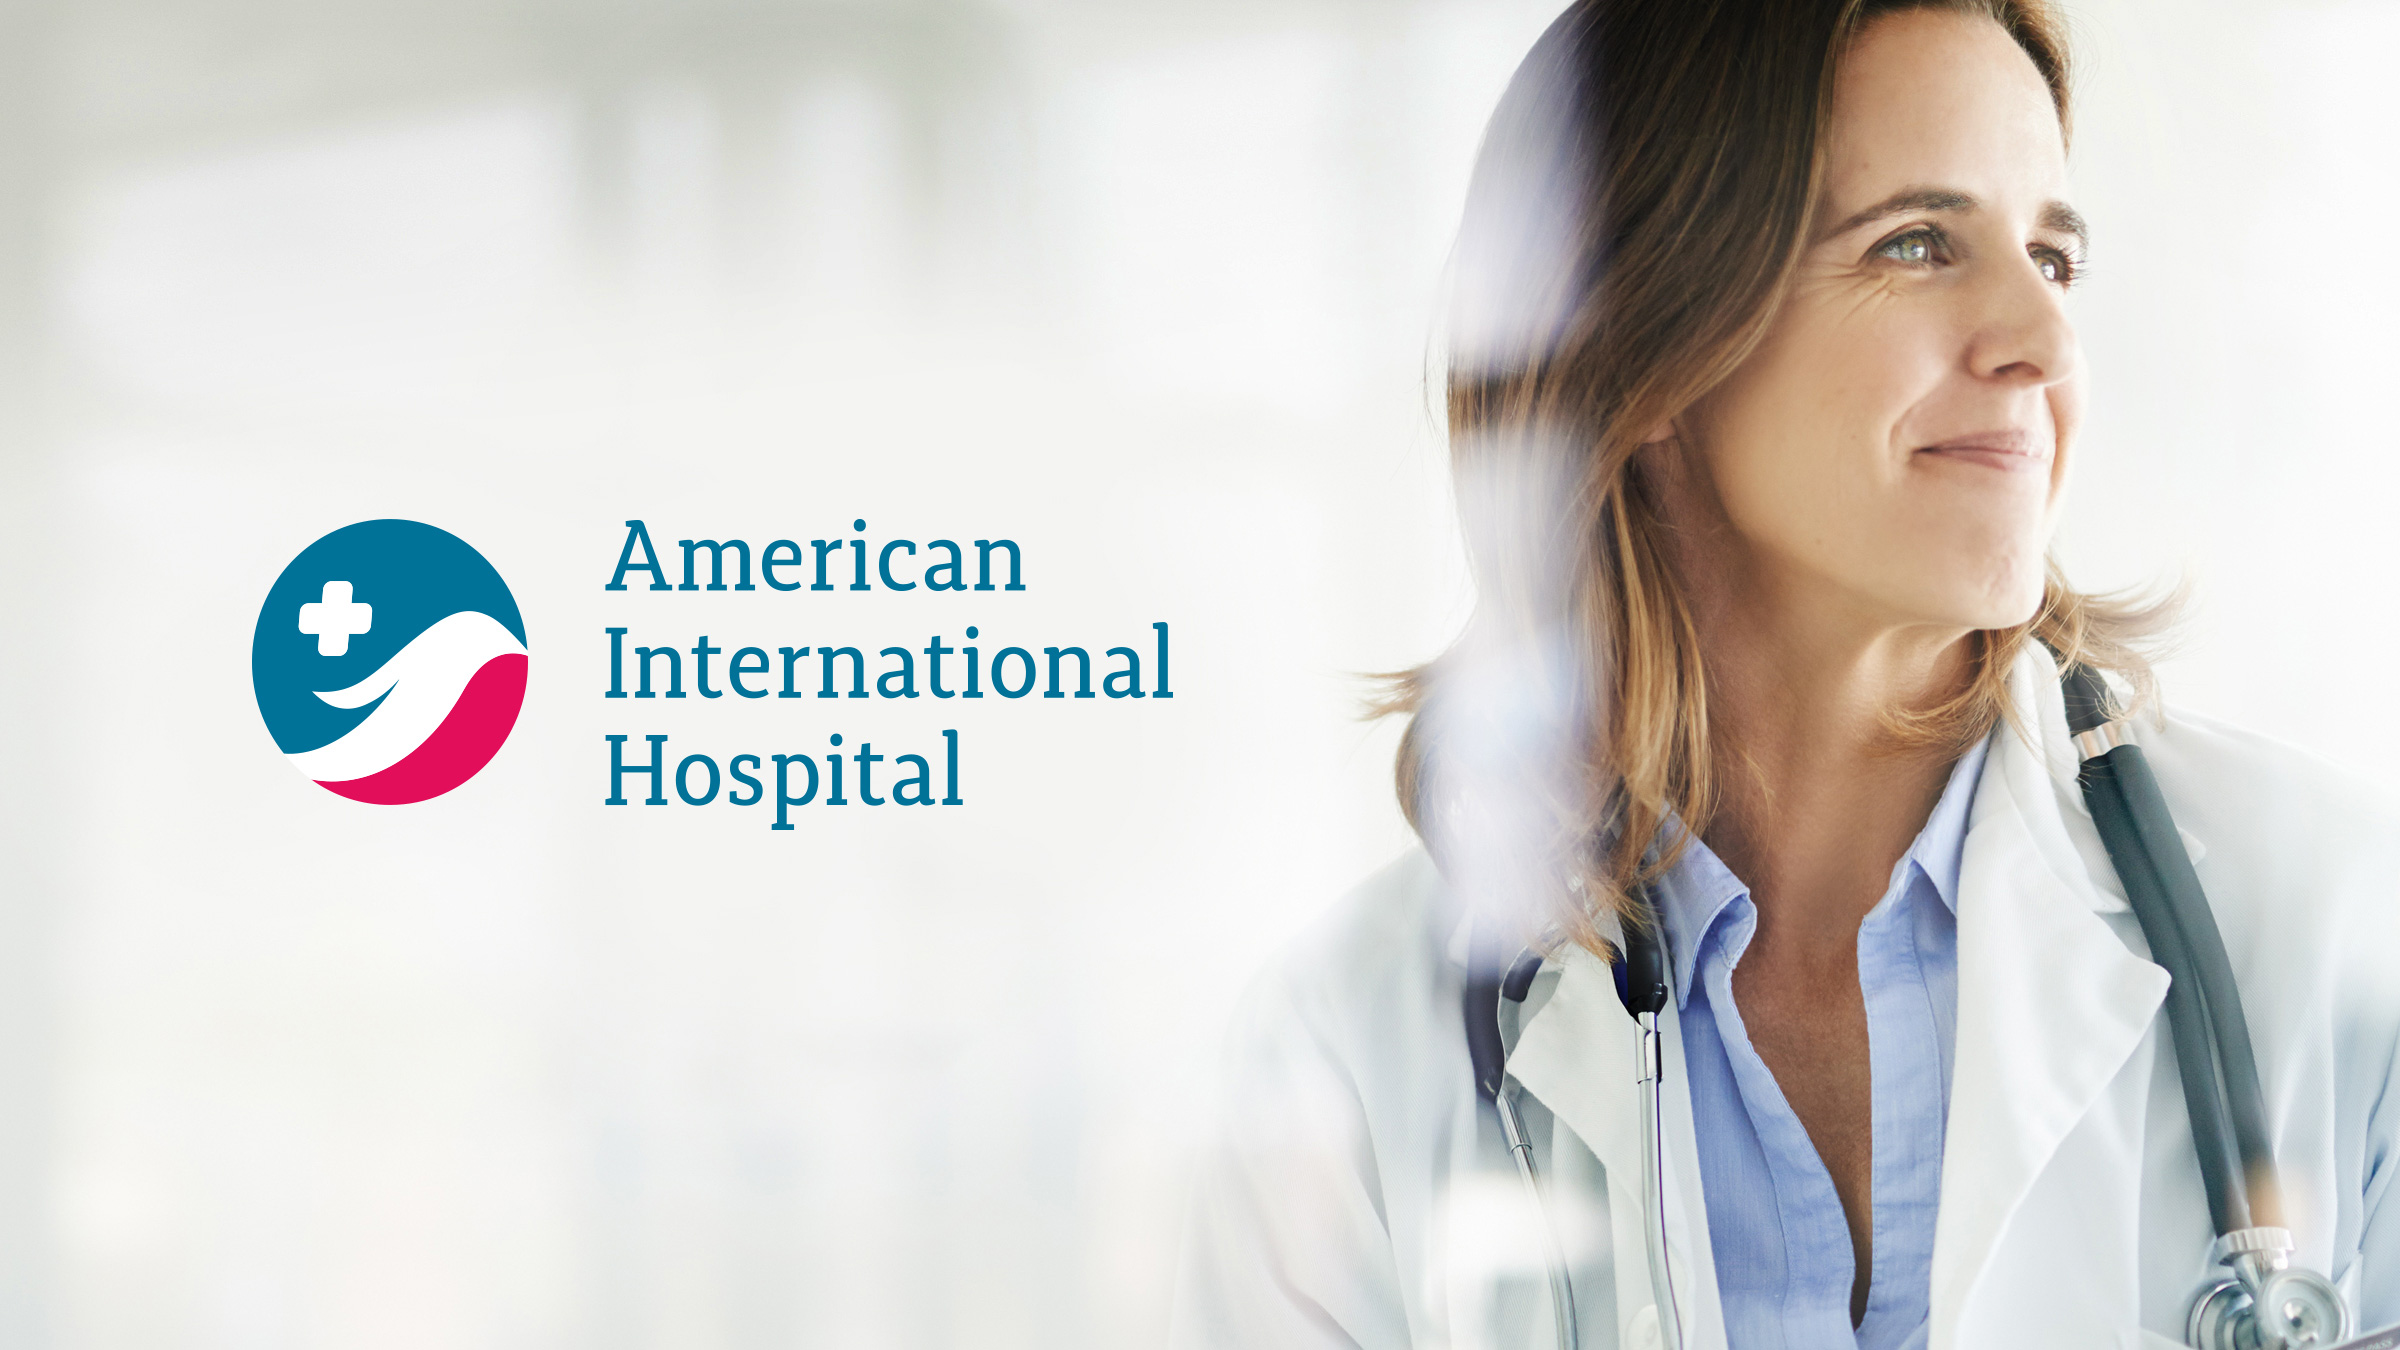 American International Hospital The Circle branding Partners